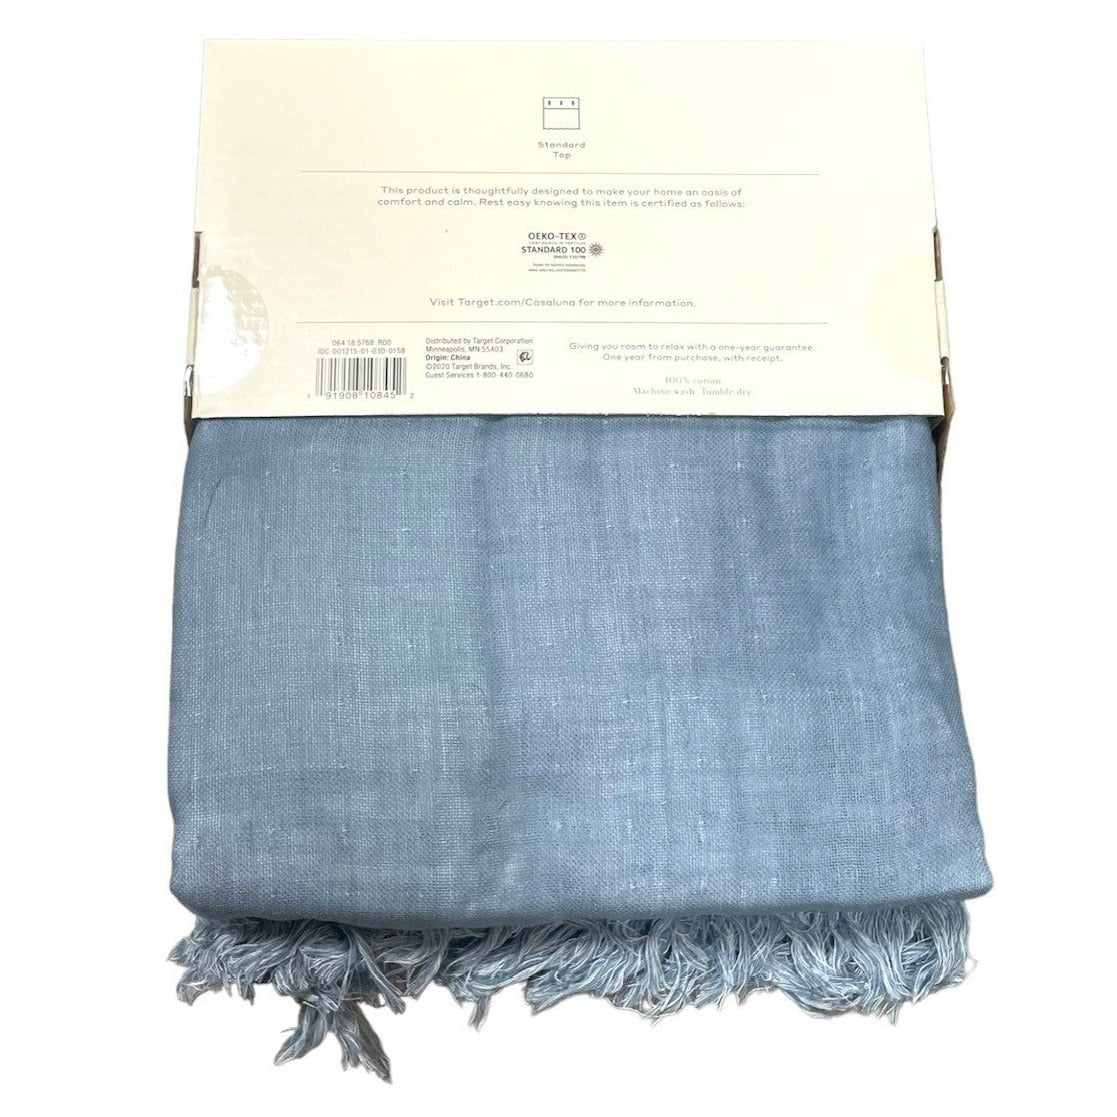 Casaluna Gauze Shower Curtain Sky Blue 72 in x 72 in, 100% Cotton bargain liquidations closeout overstock deal